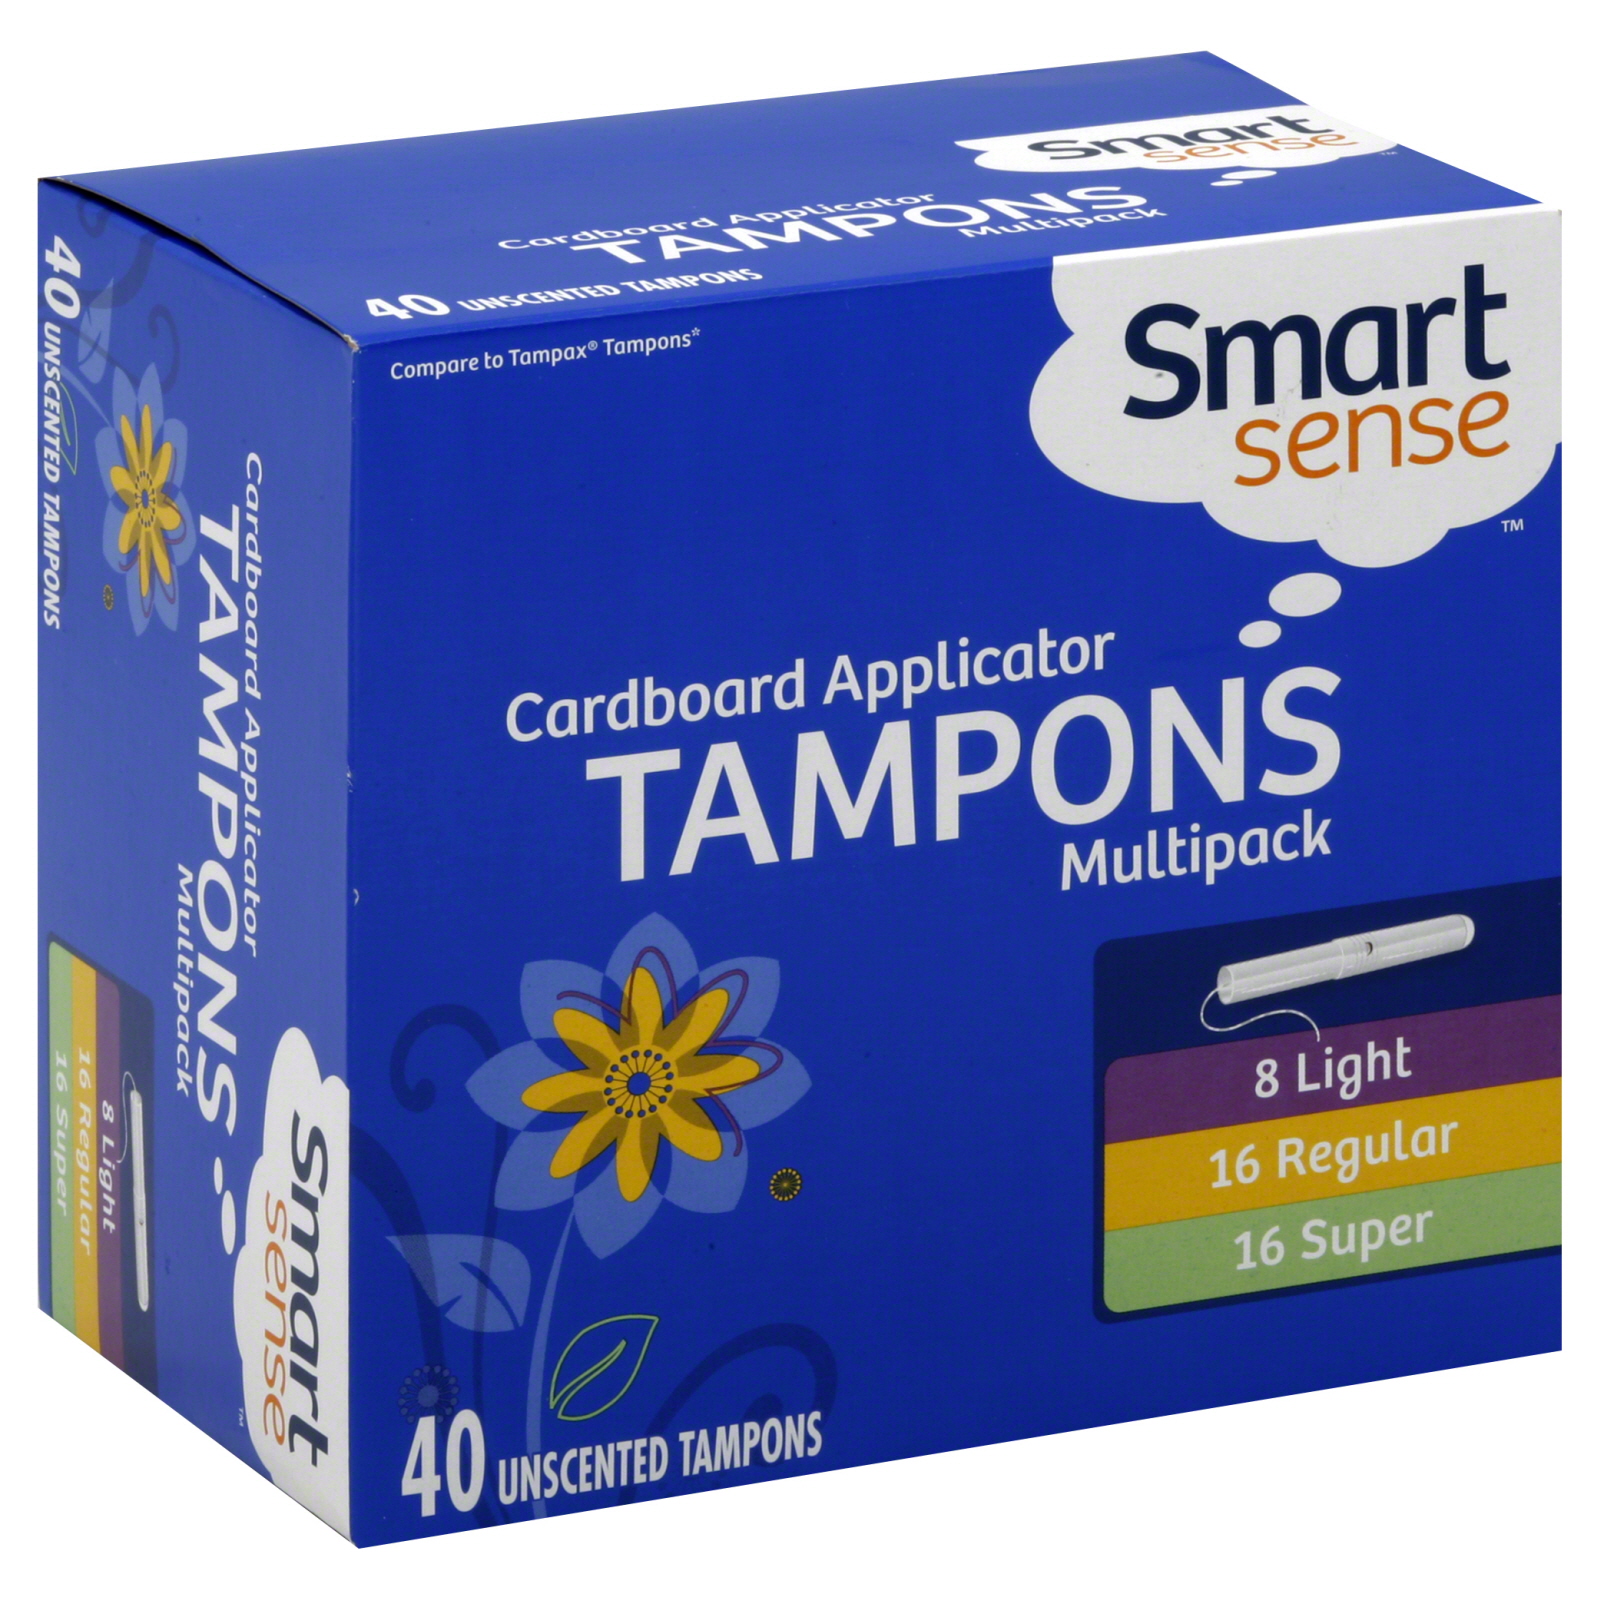 Smart Sense Tampons, Cardboard Applicator, Multi Pack, Unscented, 40 tampons